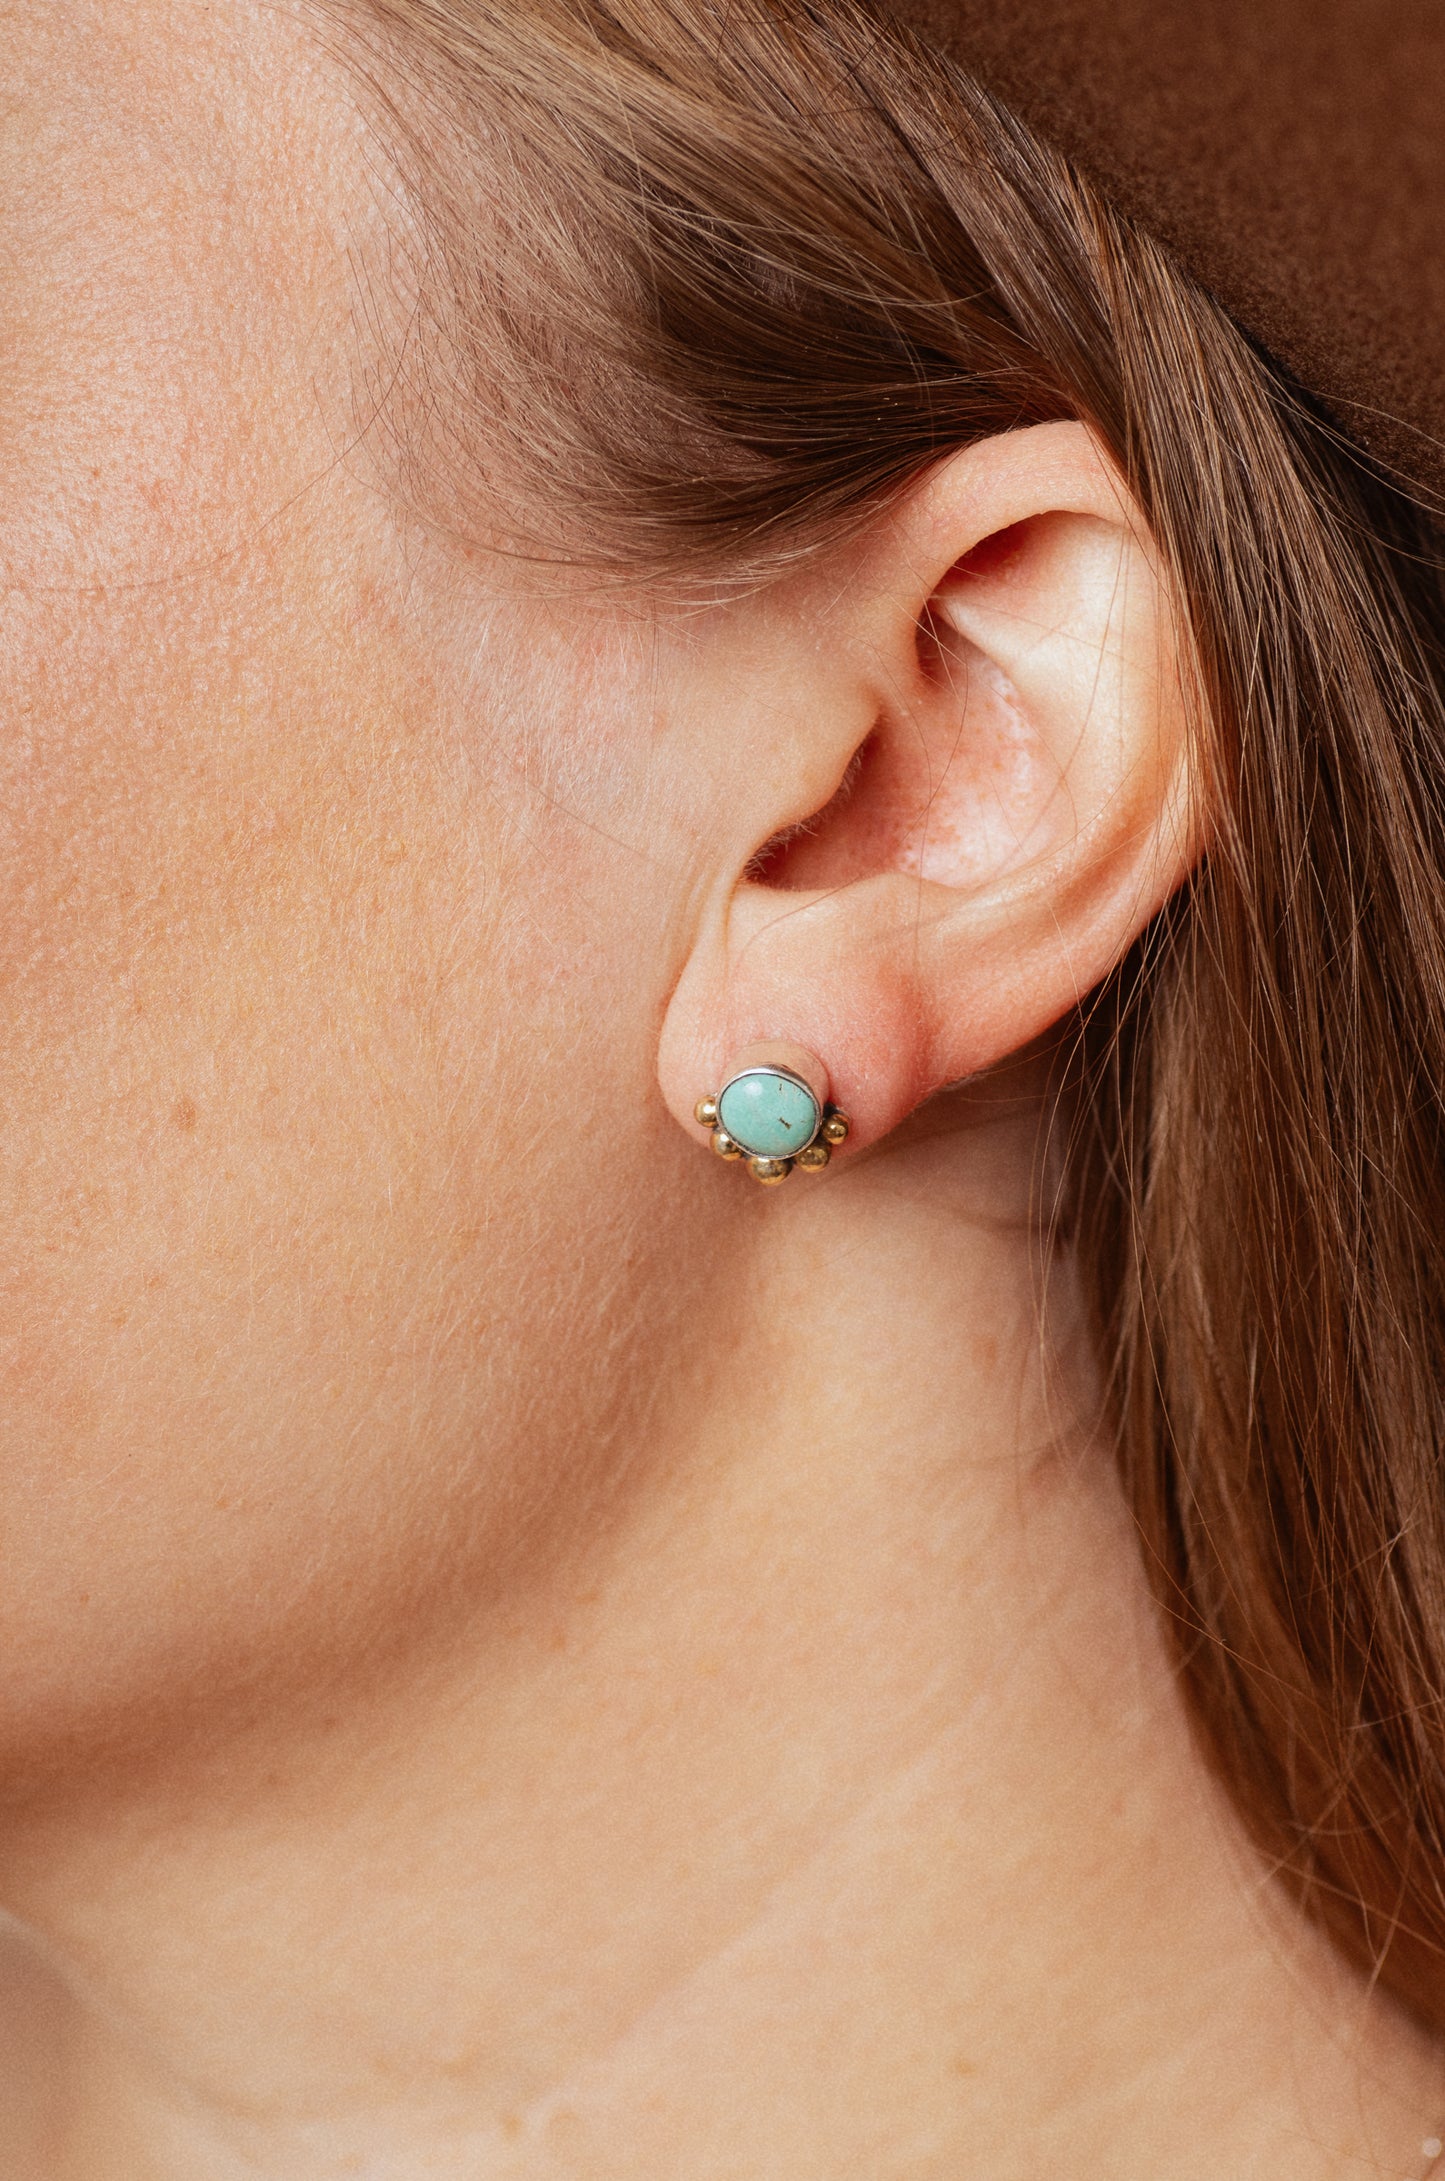 Turquoise Stud Earrings (D) ◇ Kingman Turquoise